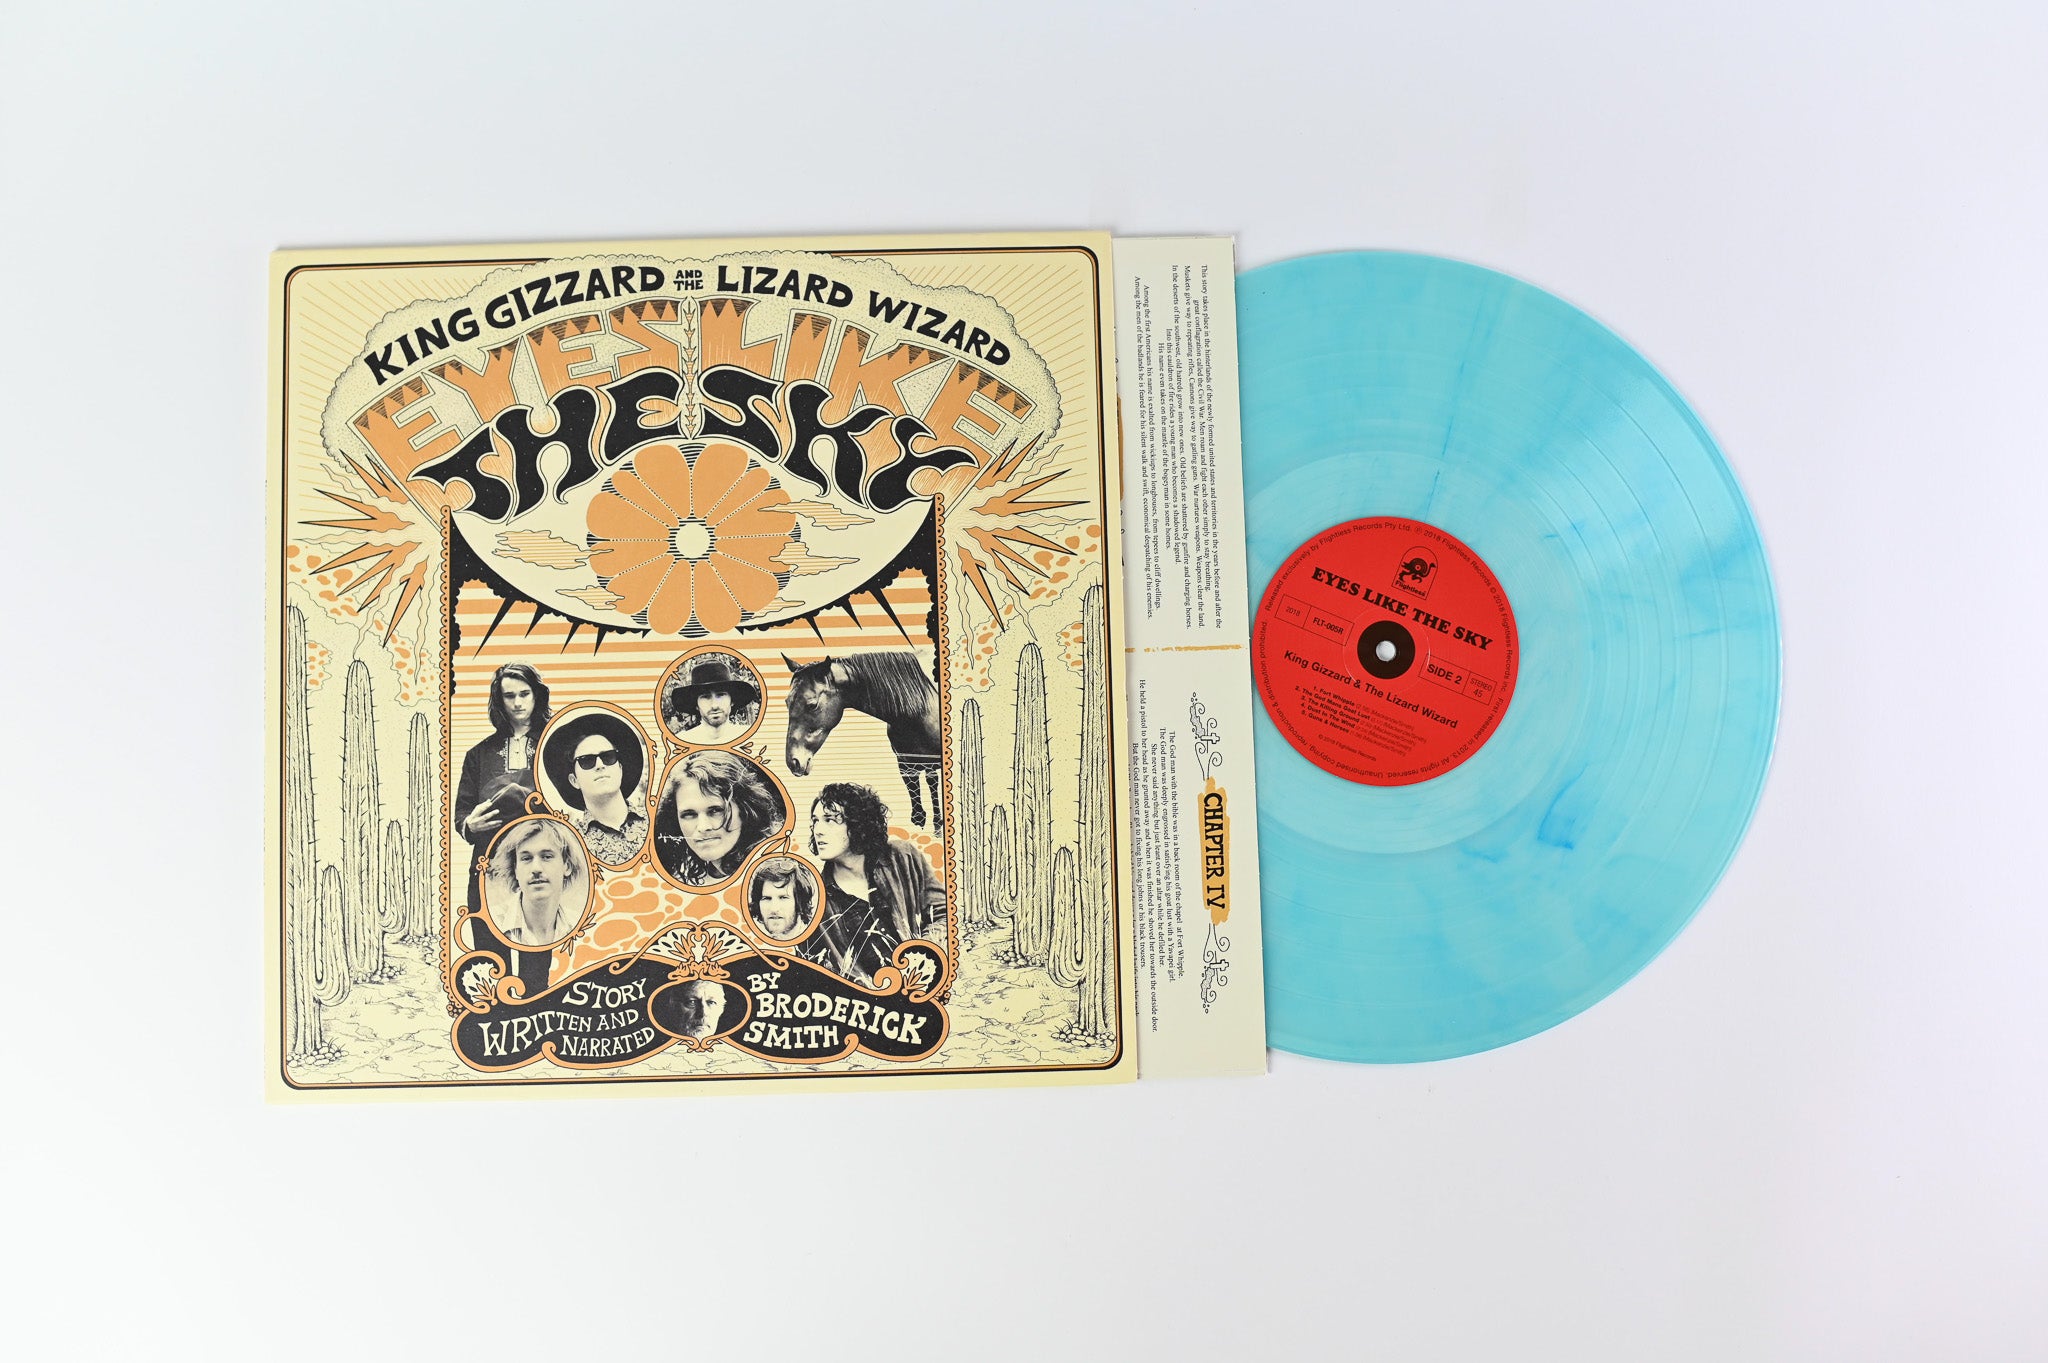 King Gizzard And The Lizard Wizard - Eyes Like The Sky Limited Reissue on Flightless Gun Smoke Vinyl